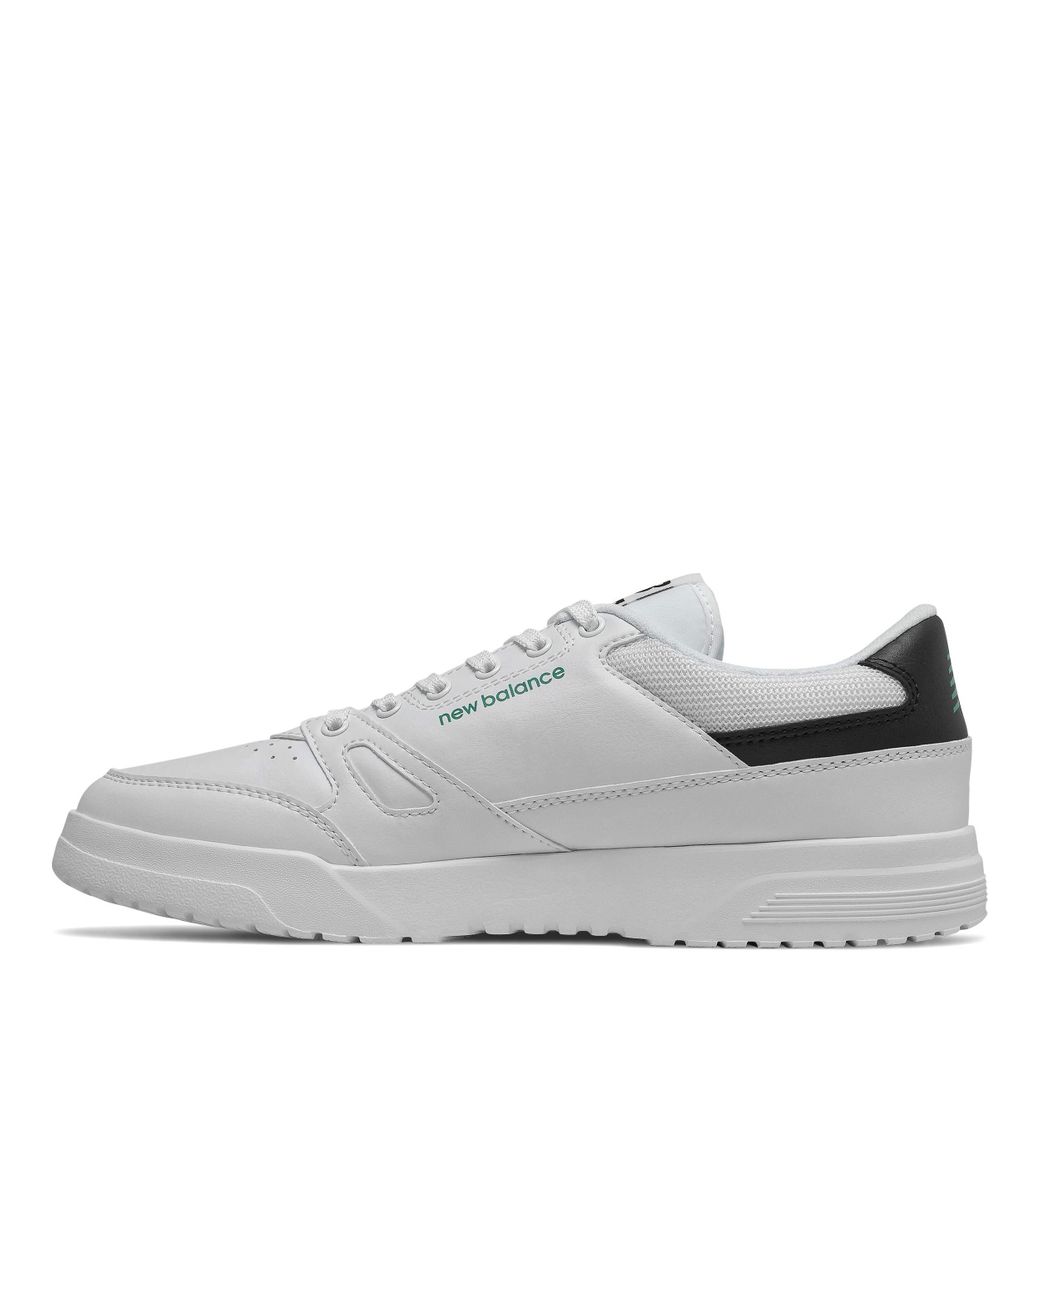 New Balance Synthetic Ct20 V1 Sneaker in White for Men - Lyst